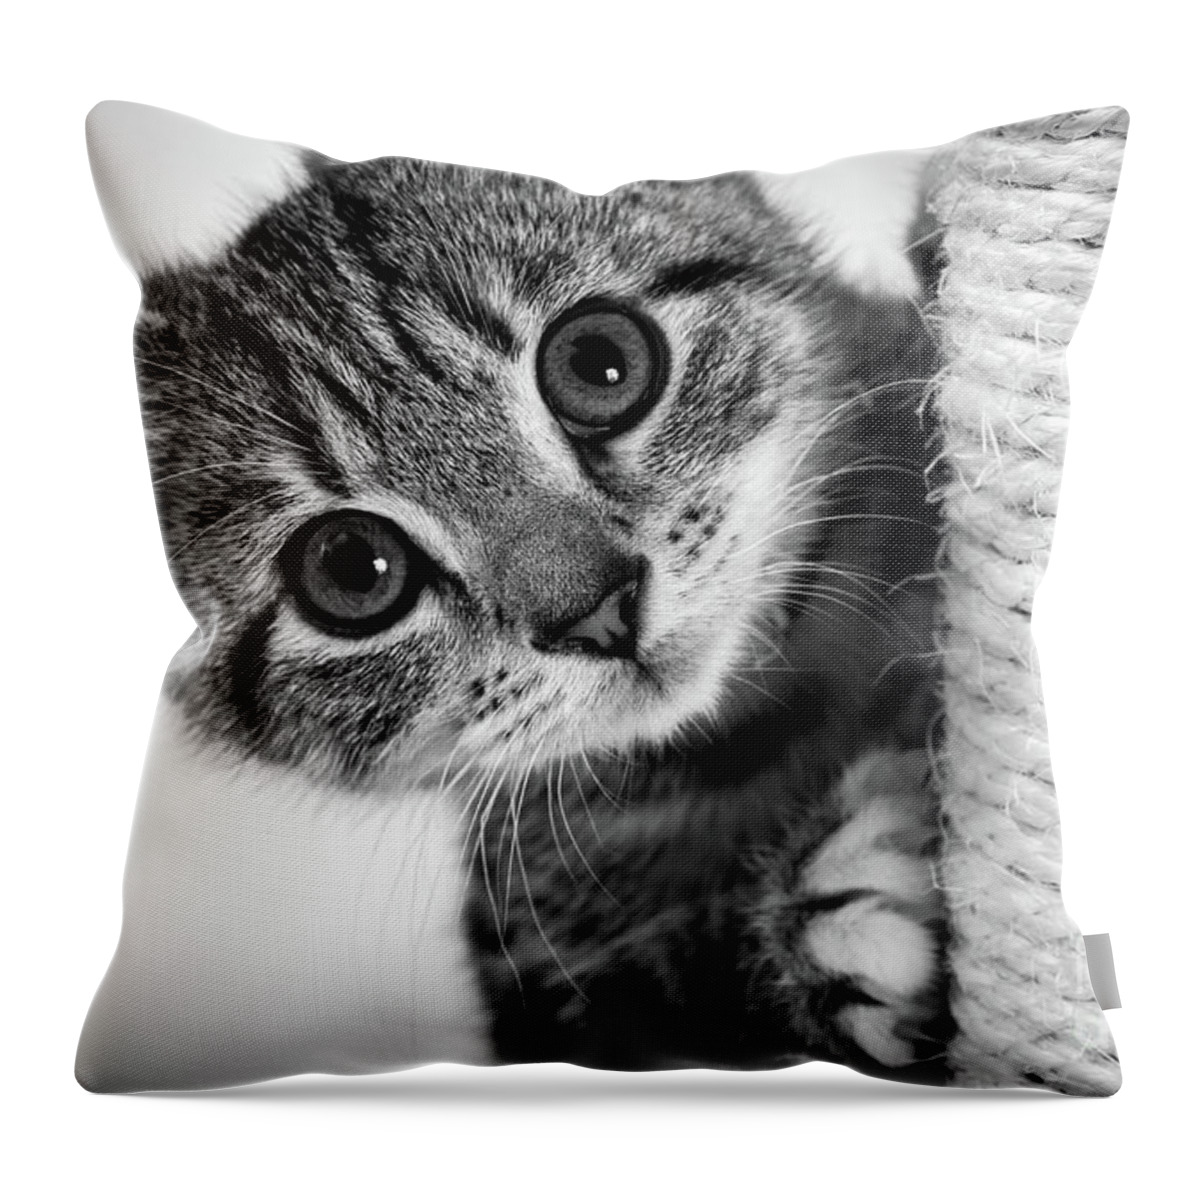 1 Kitten Throw Pillow featuring the photograph Cute kitten #2 by Seeables Visual Arts